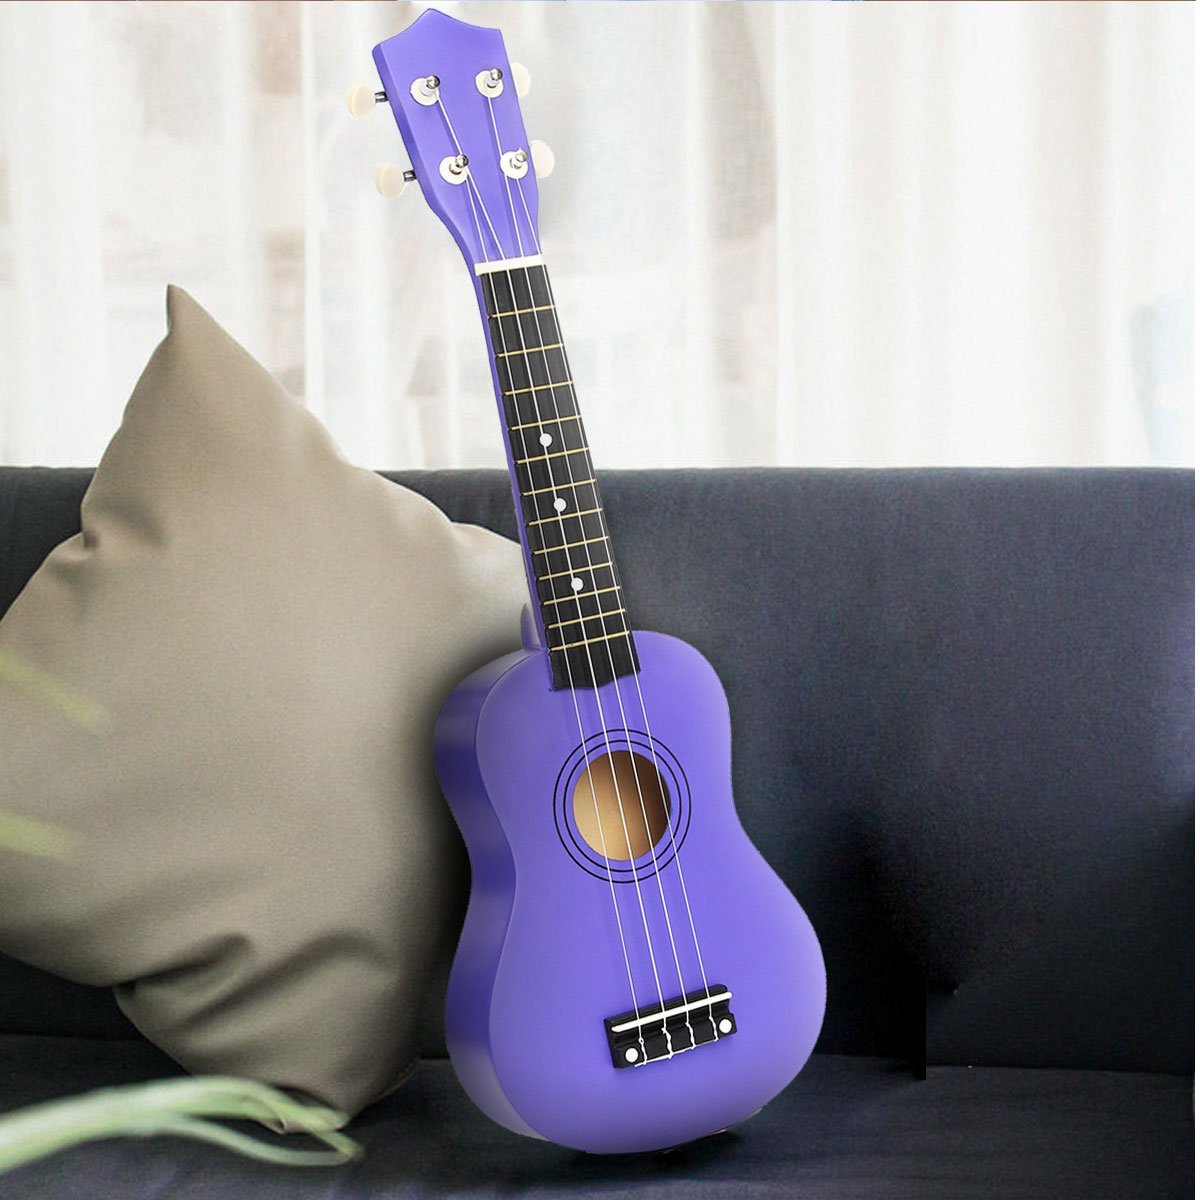 Ukulele 21 inch Ukulele Soprano 4 Strings Hawaiian Guitar Basswood Guitar Uke Kids Gift Musical Instruments for Music Beginner - AKLOT